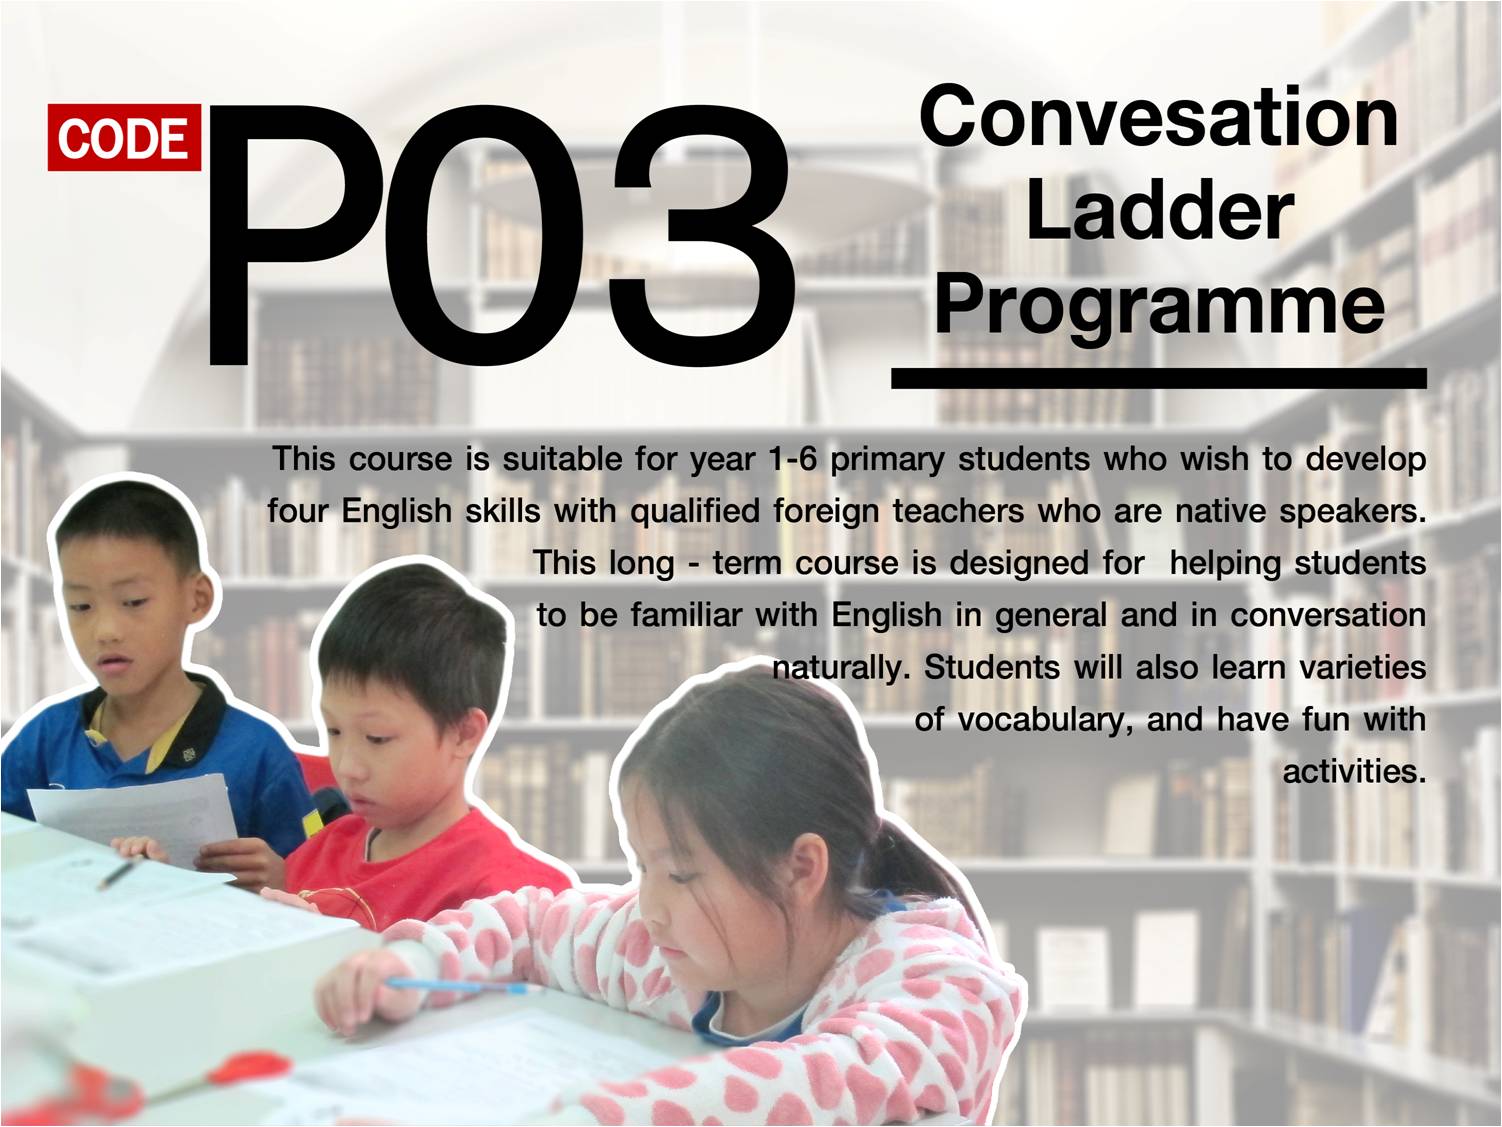 Convesation Ladder Programme